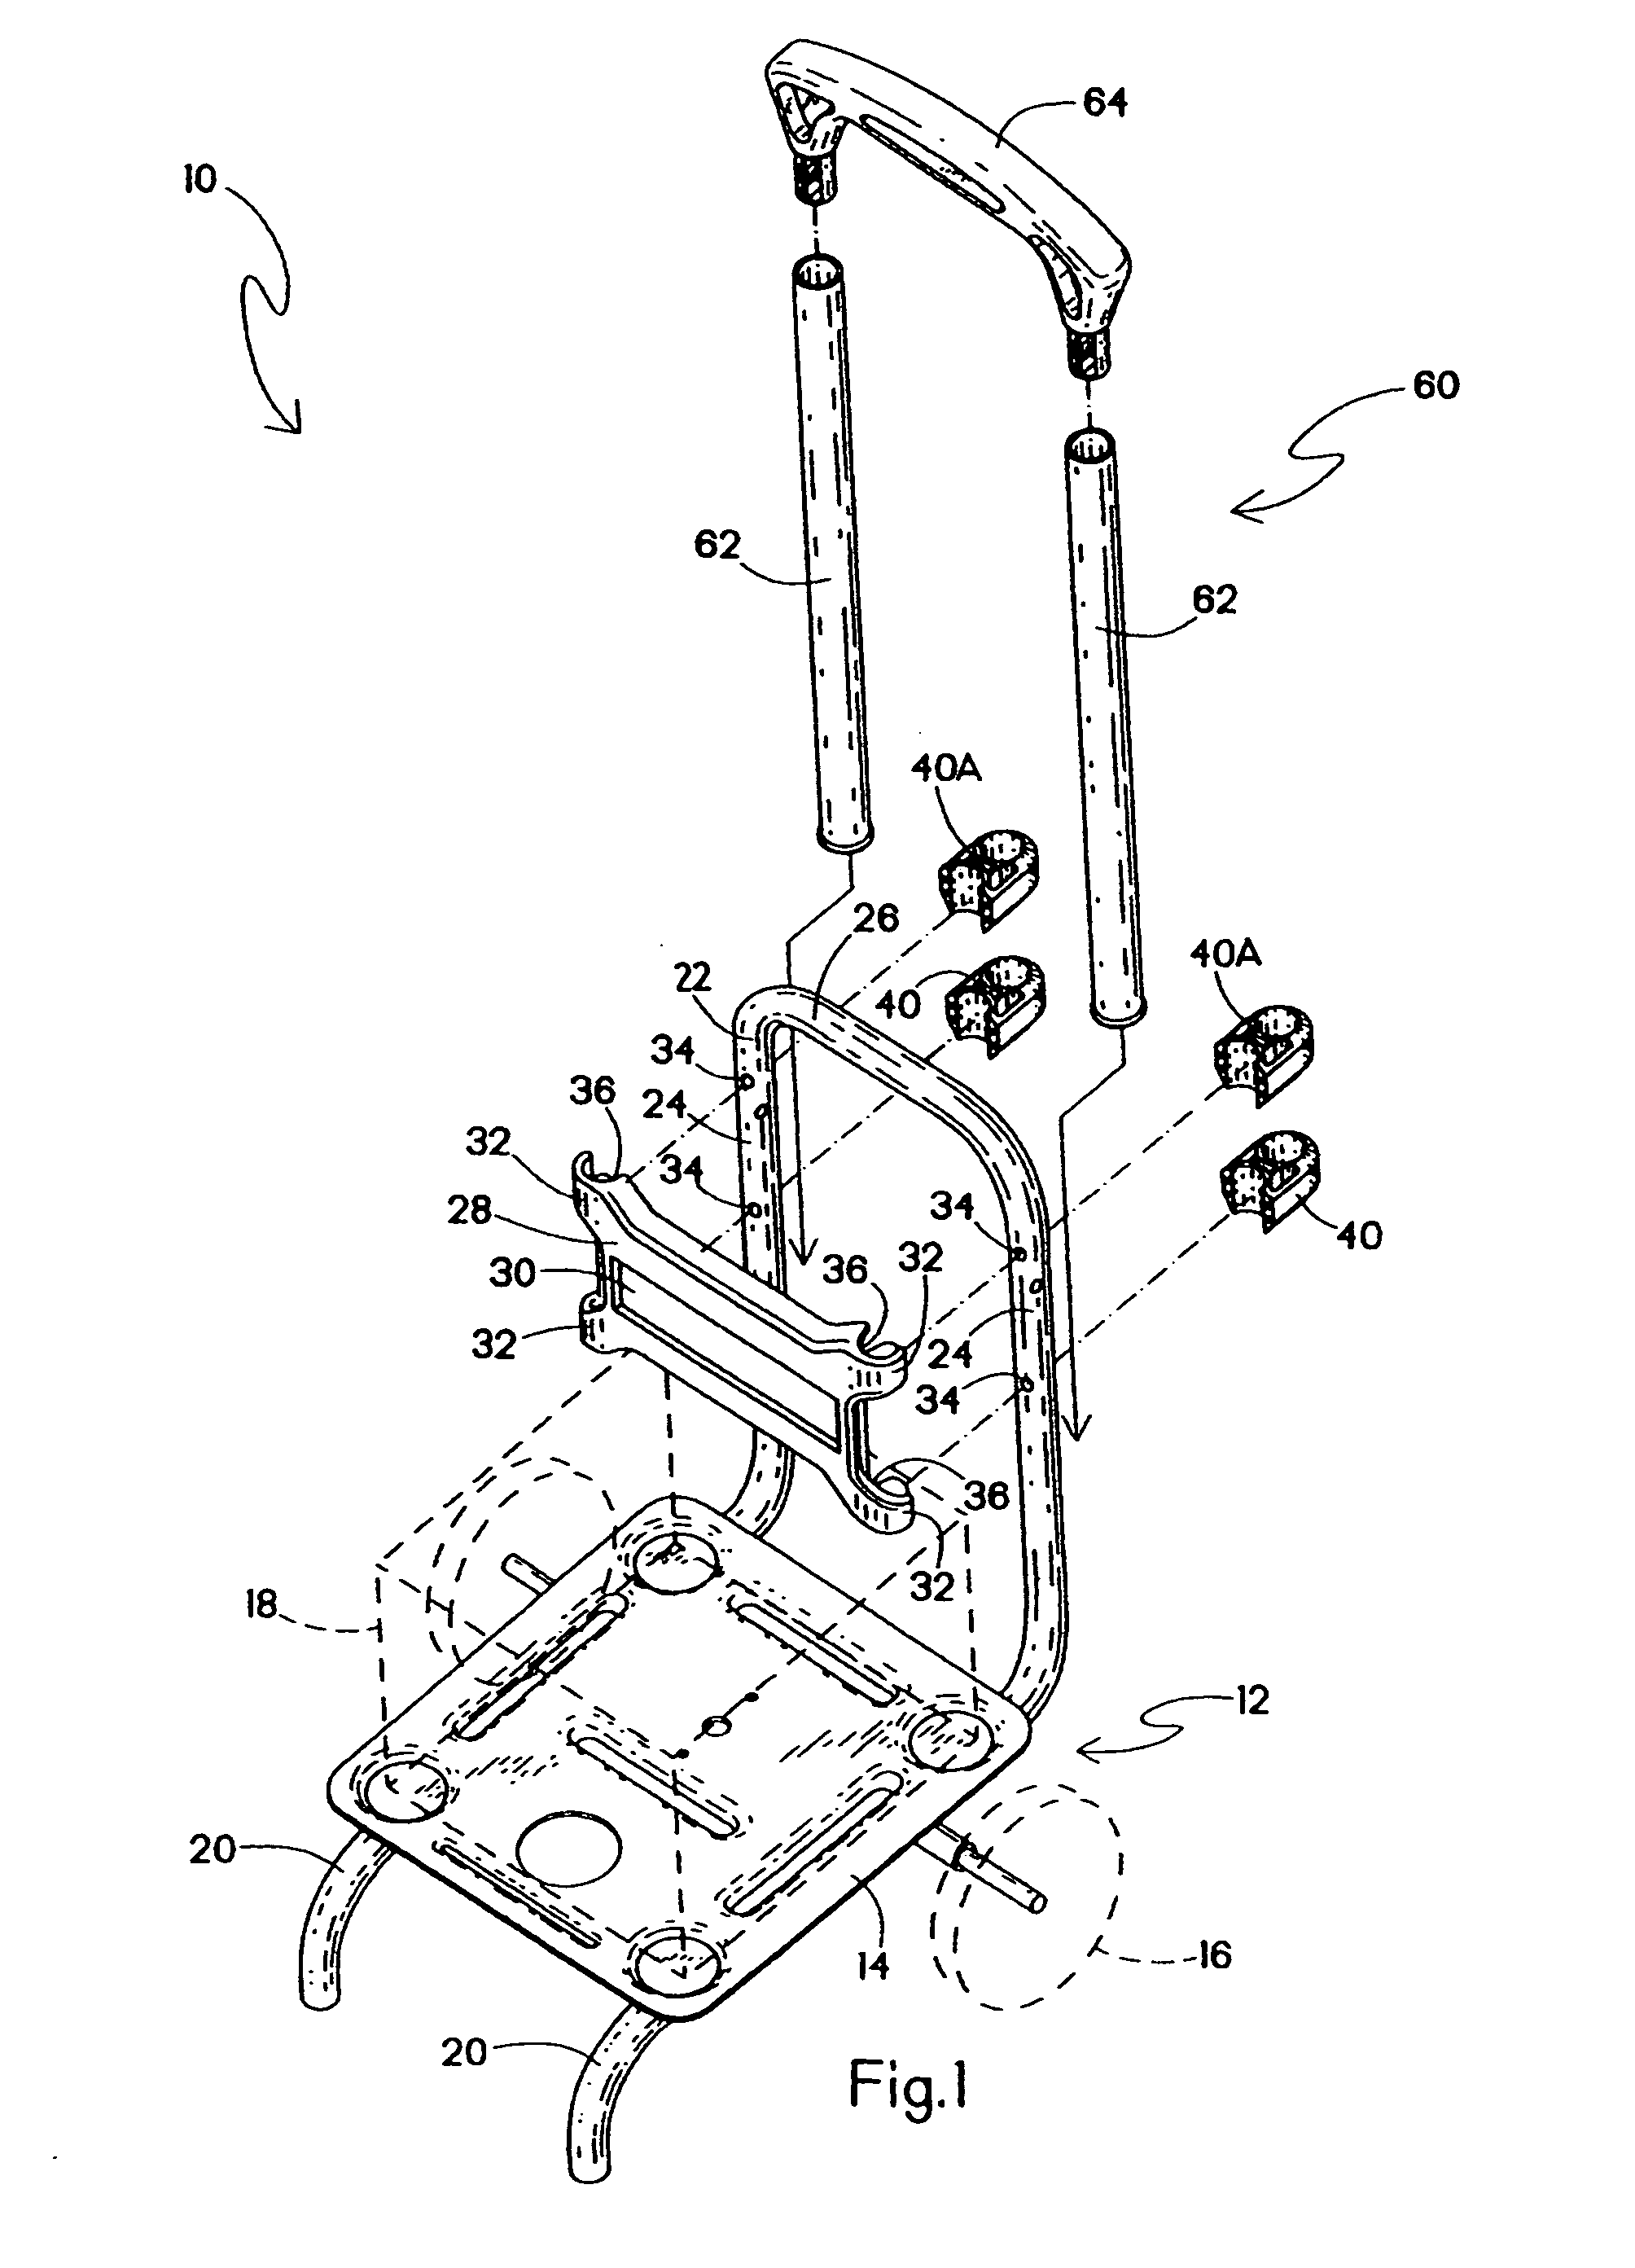 Portable air compressor dolly with retractable handle